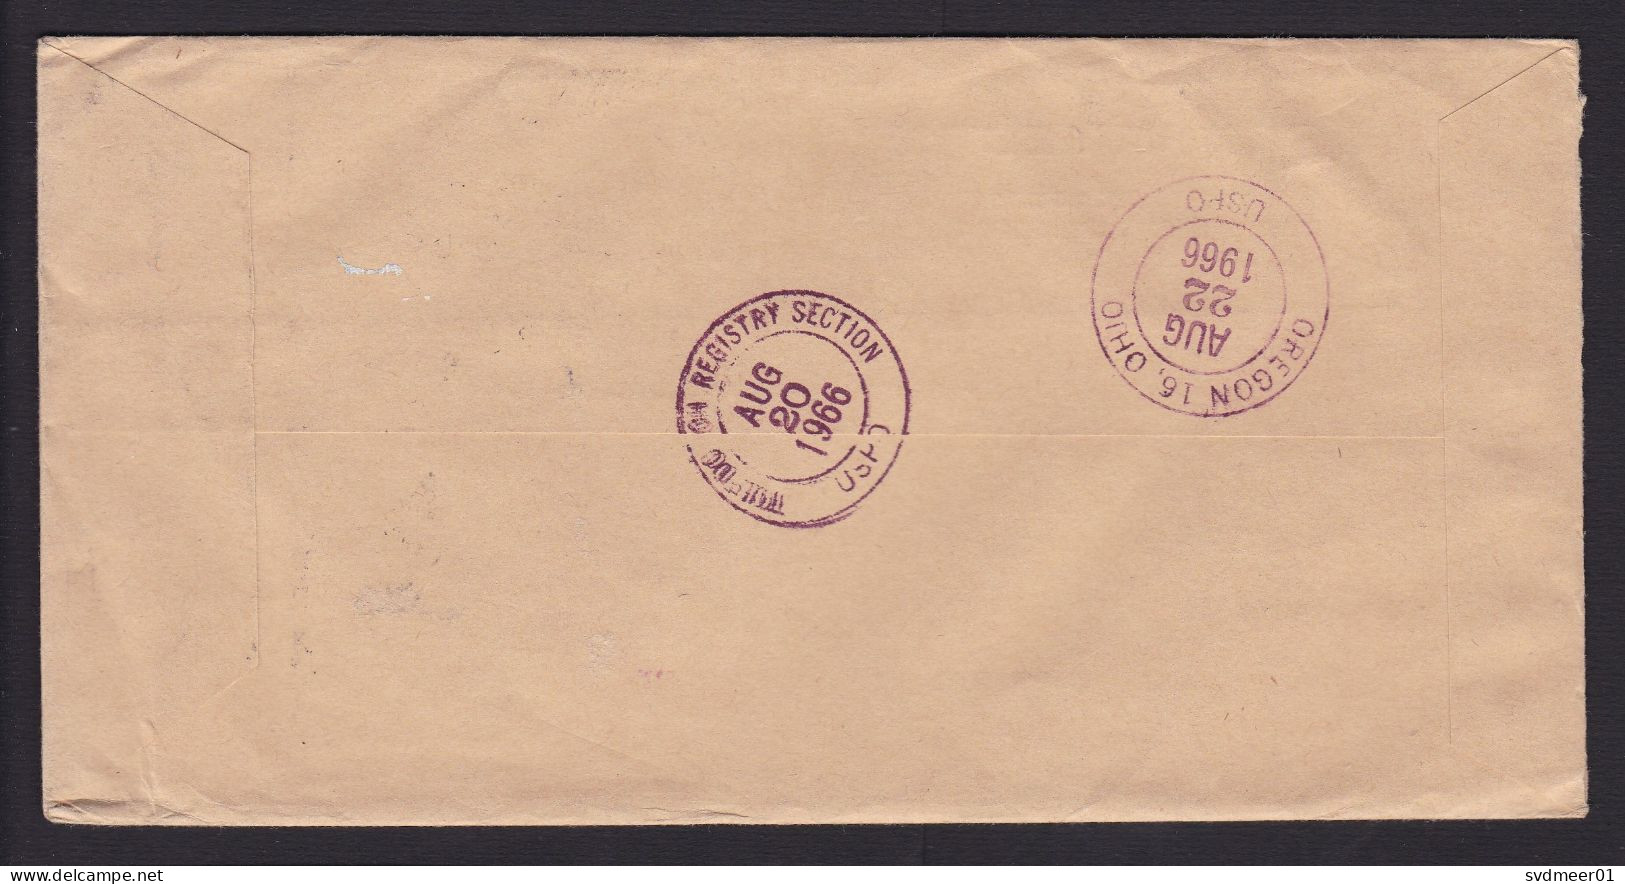 Ryukyu Islands: Registered Cover To USA, 1966, 3 Stamps, Flower, War, Lady Dress, Customs & R-label Naha (traces Of Use) - Ryukyu Islands